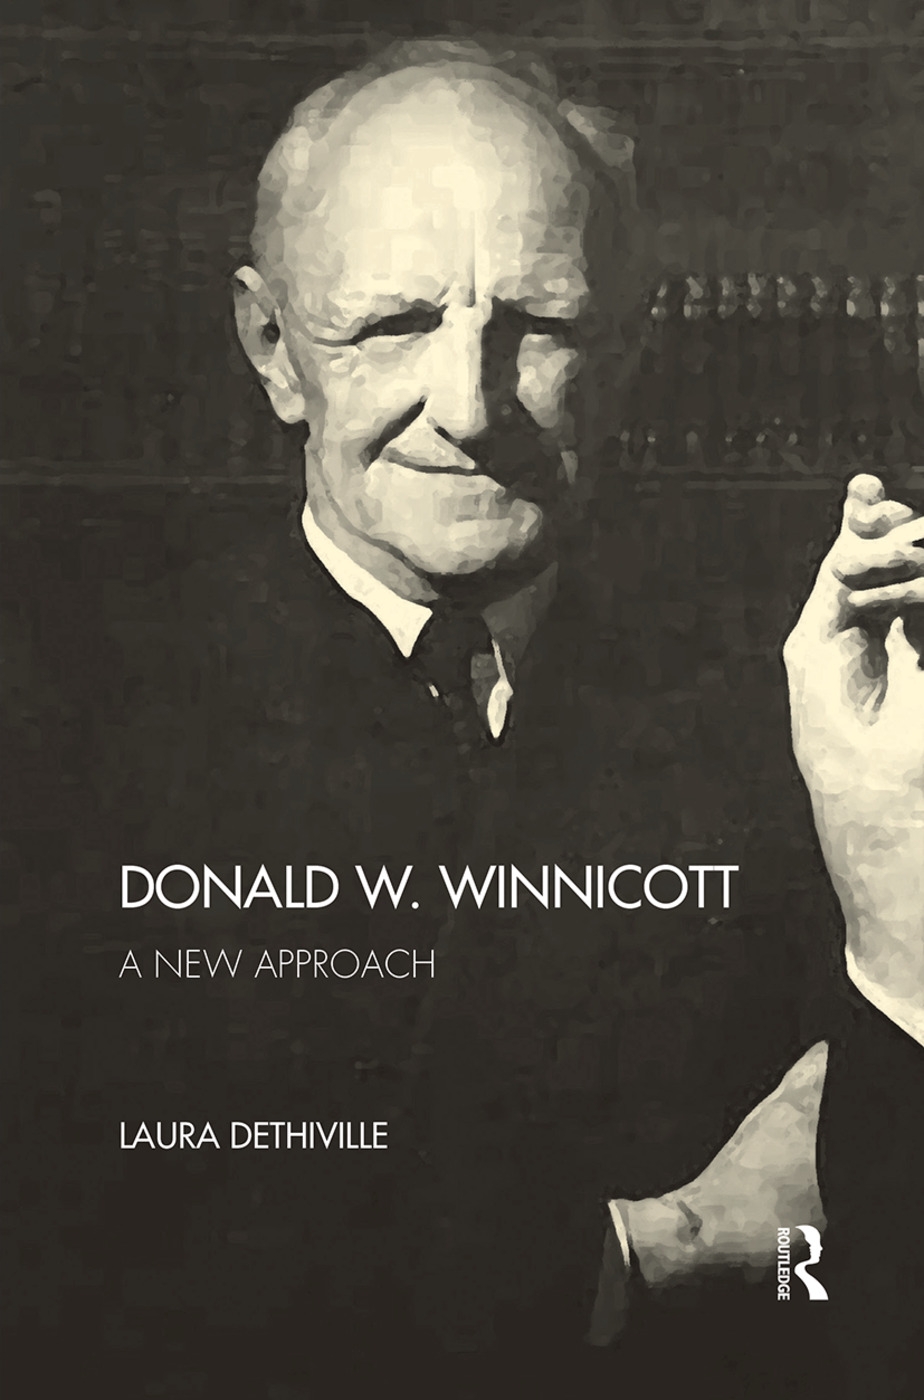 Donald W. Winnicott: A New Approach